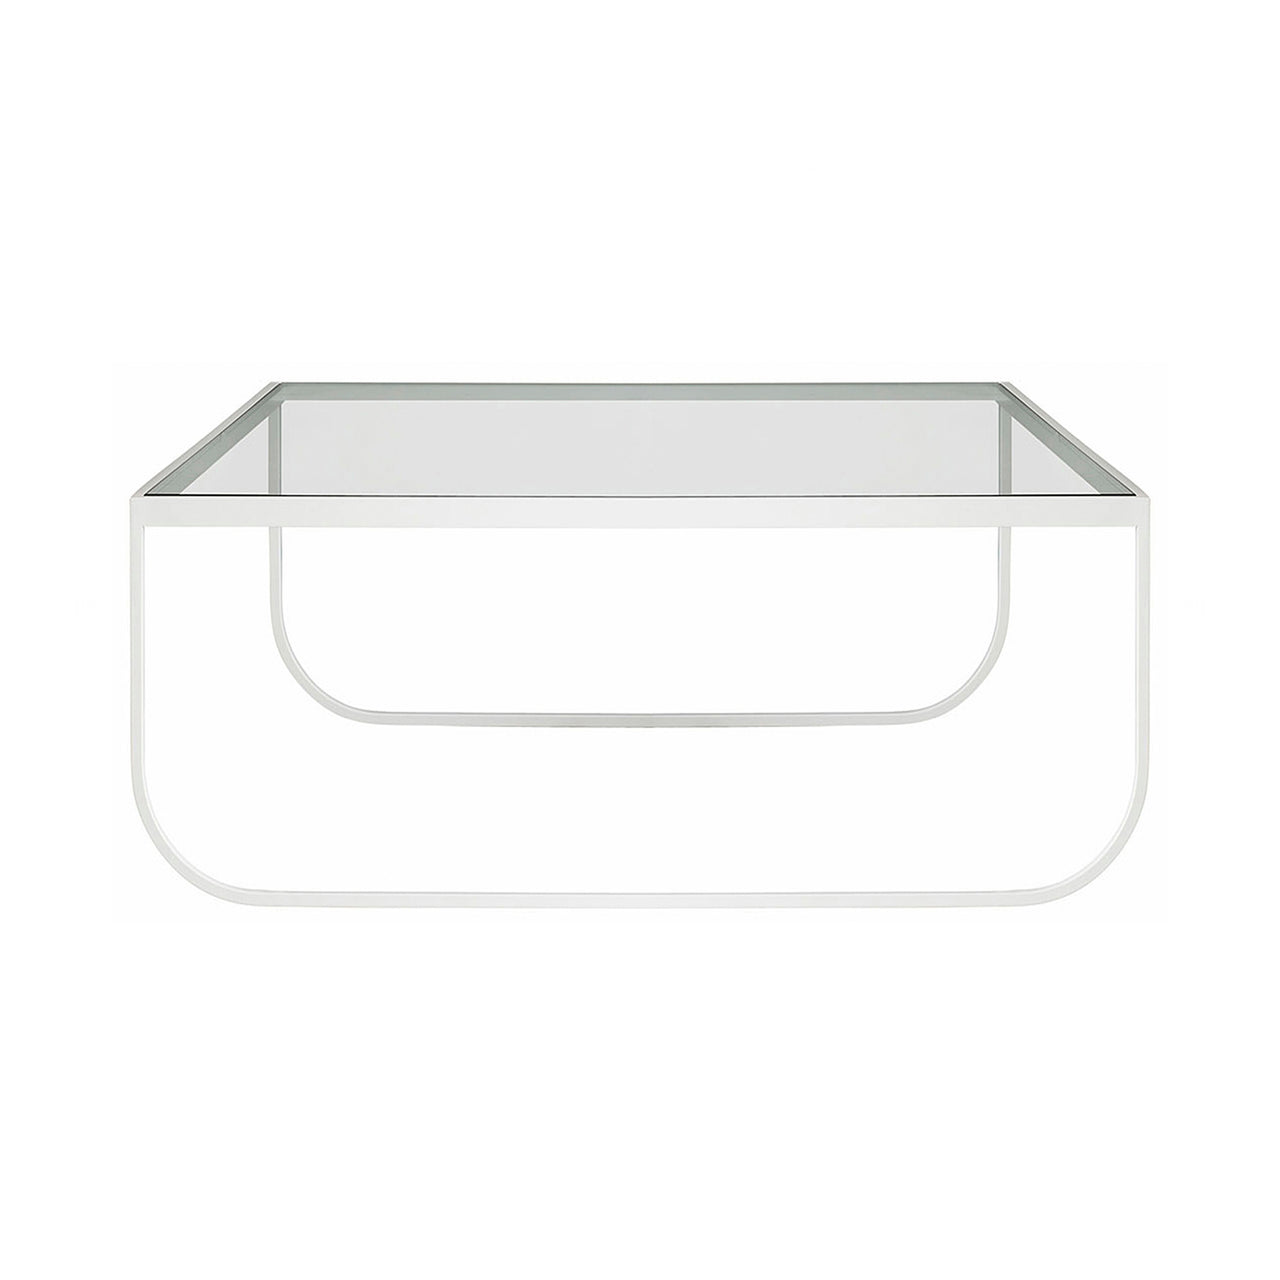 Tati Coffee Table: High + Glass Top + Transparent Glass + White